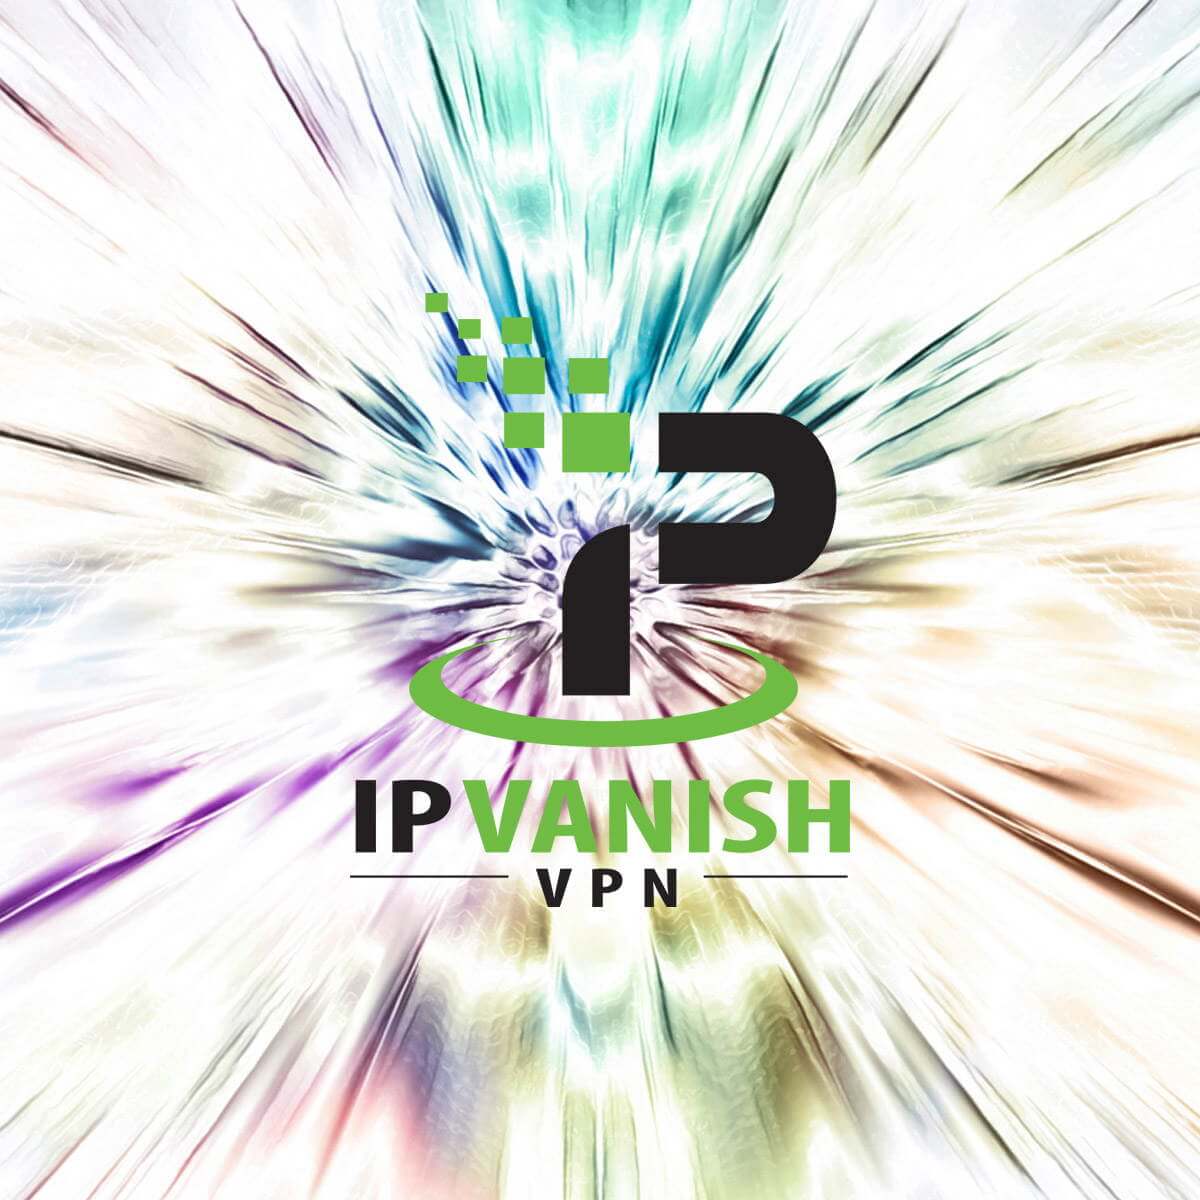 ipvanish not connecting on firestick